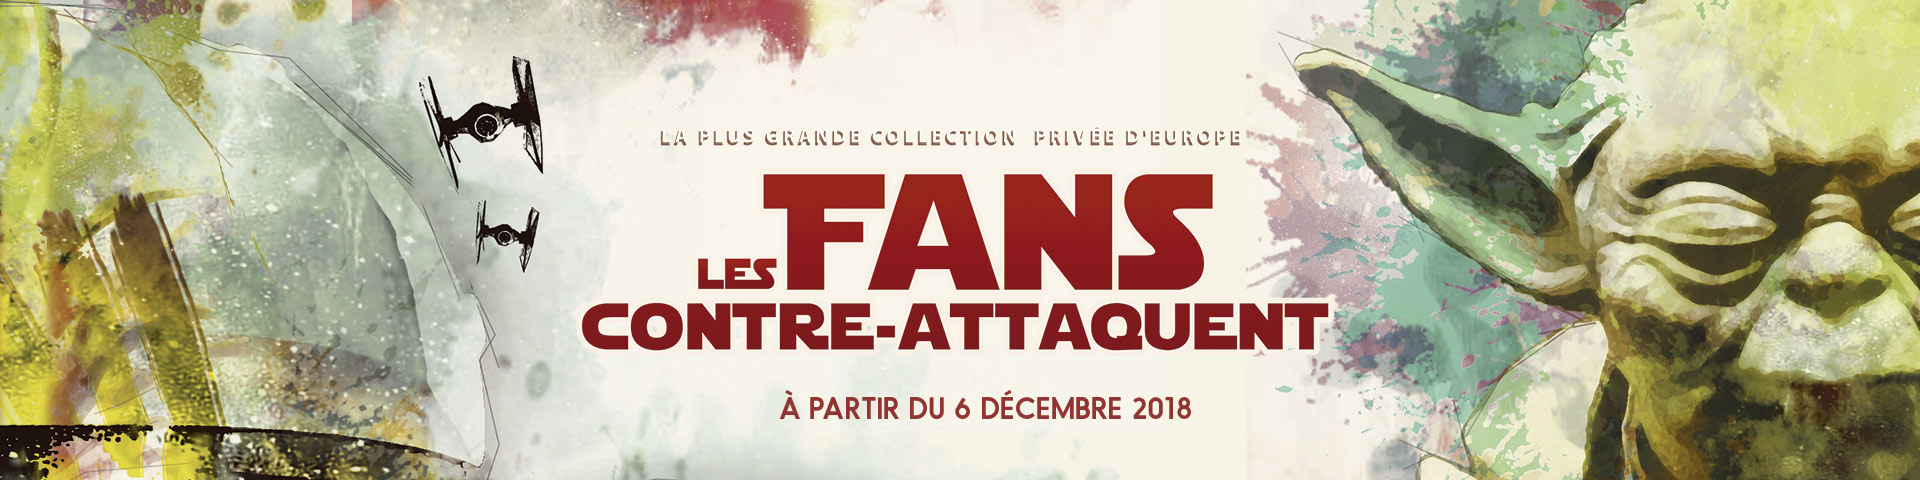 Sorties - Les Fans contre-attaquent, exposition Star Wars à Paris fans contre attaquent expo star wars